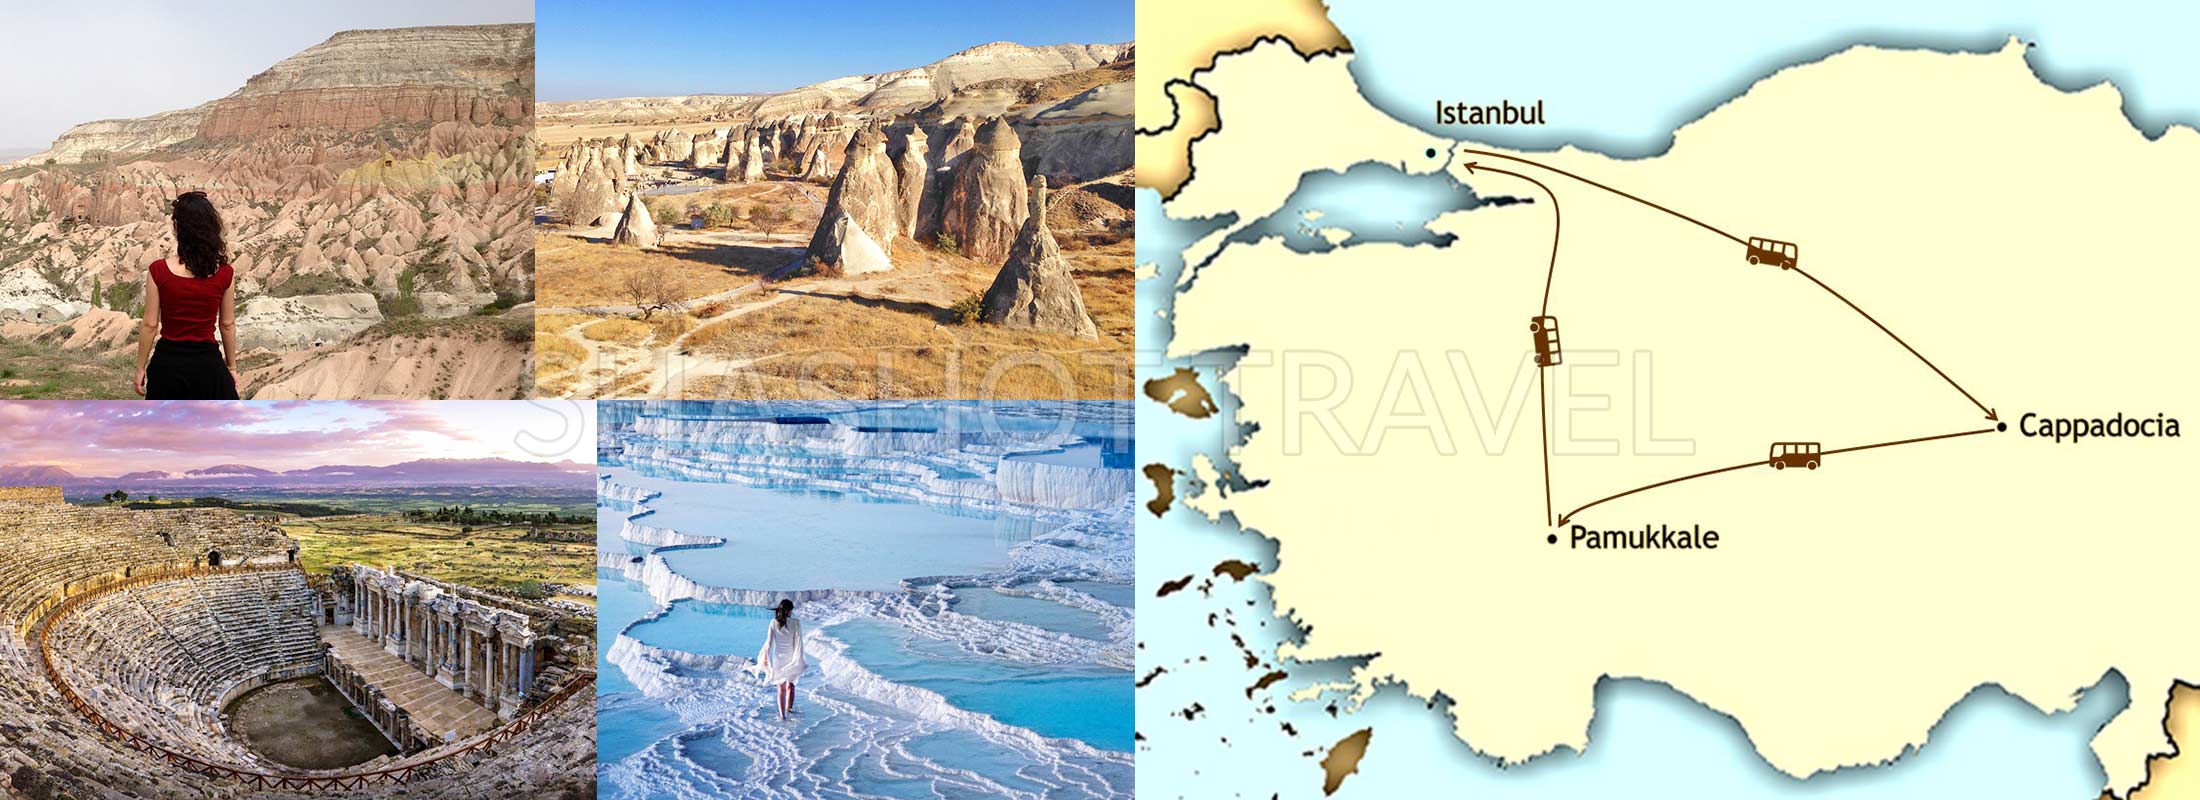 3-DAYS-TURKEY-PACKAGE-TOUR-CAPPADOCIA-PAMUKKALE-HIERAPOLIS-BY-bus-map